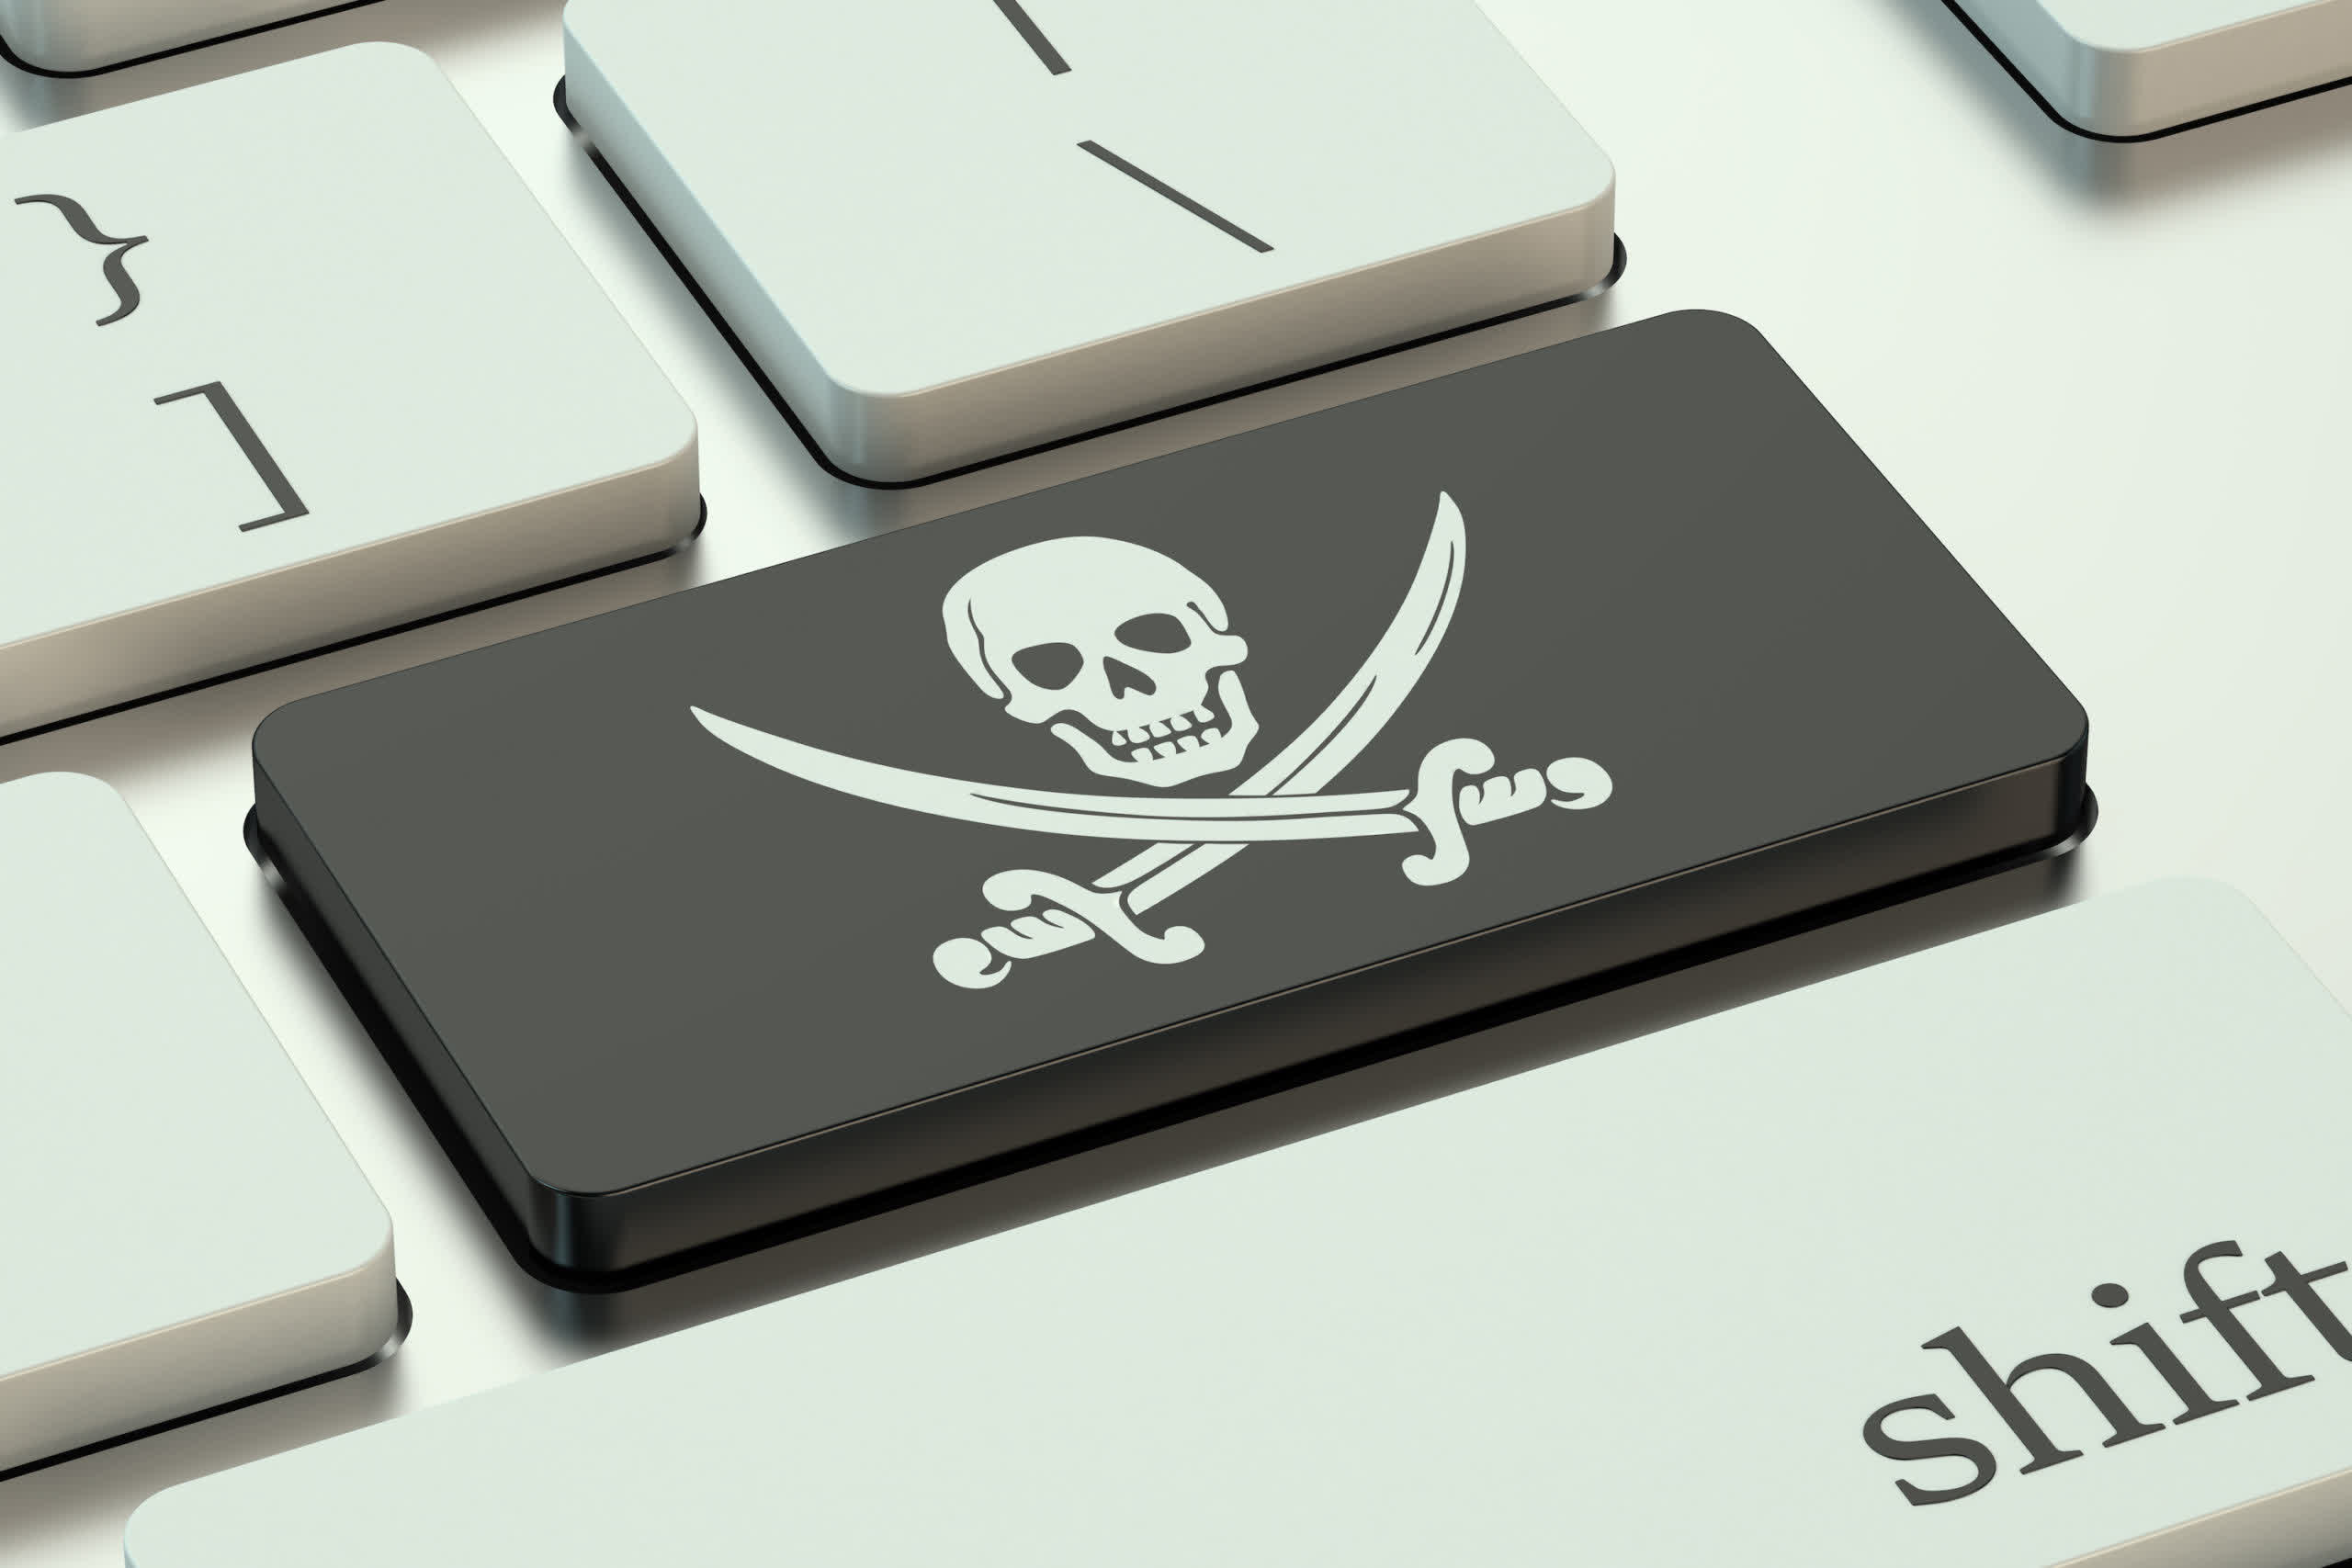 Anti-piracy coalition helped dismantle Evo piracy group